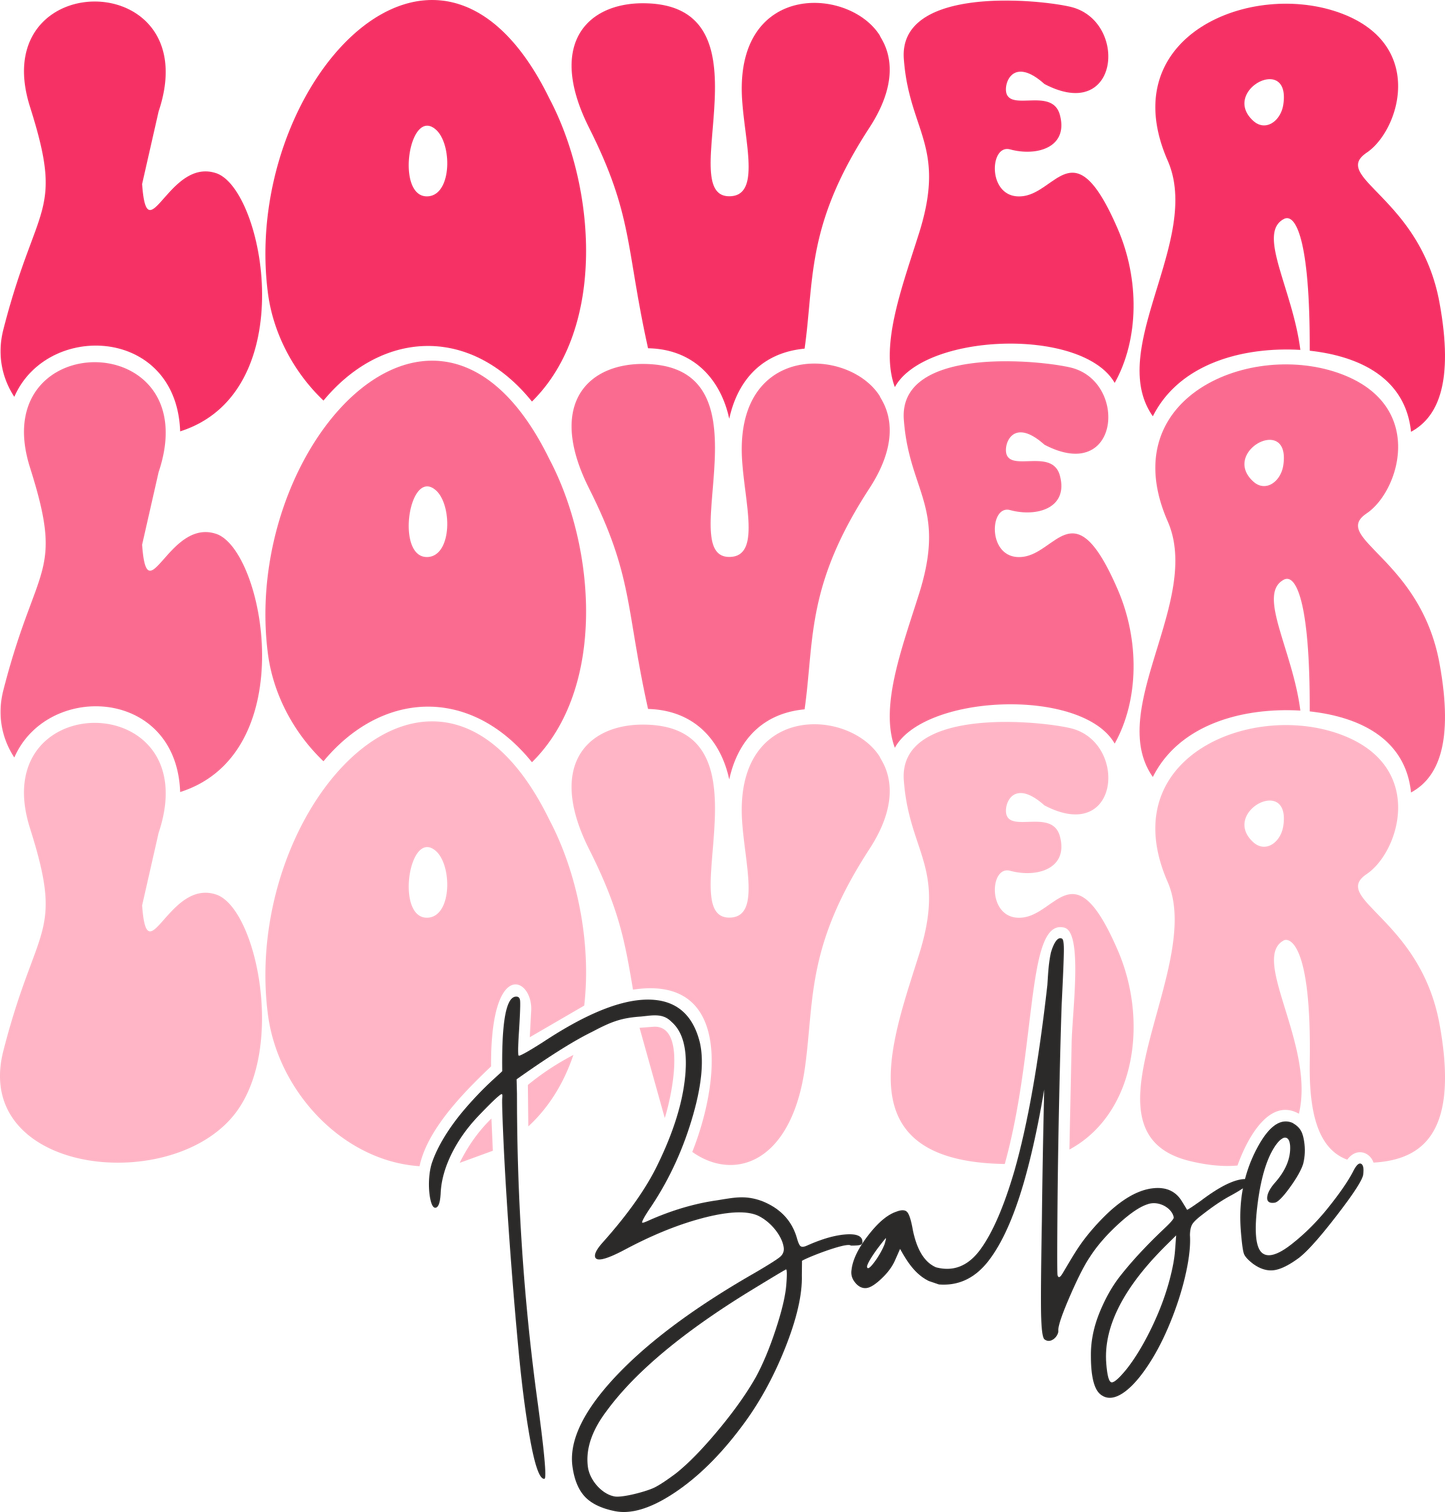 VALENTINE'S DAY PRINT 201 - lover lover lover babe